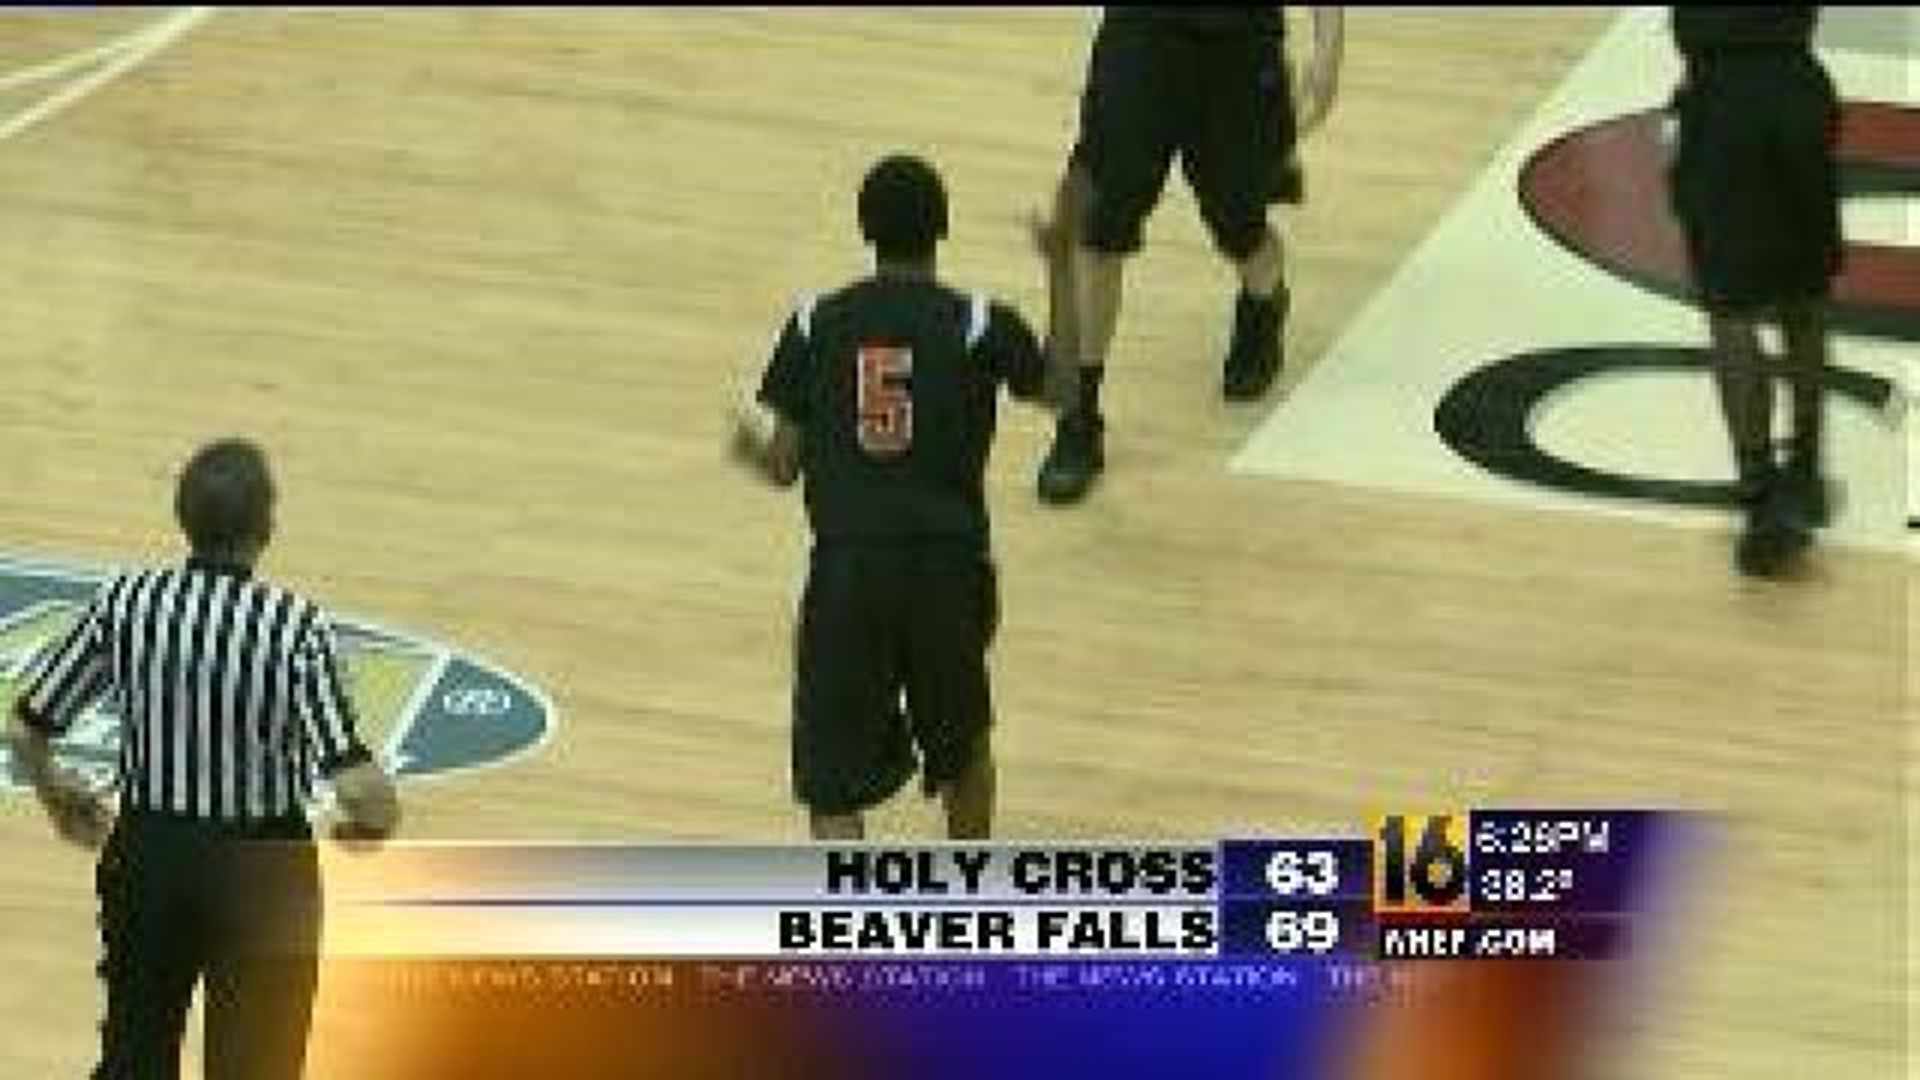 Holy Cross vs Beaver Falls